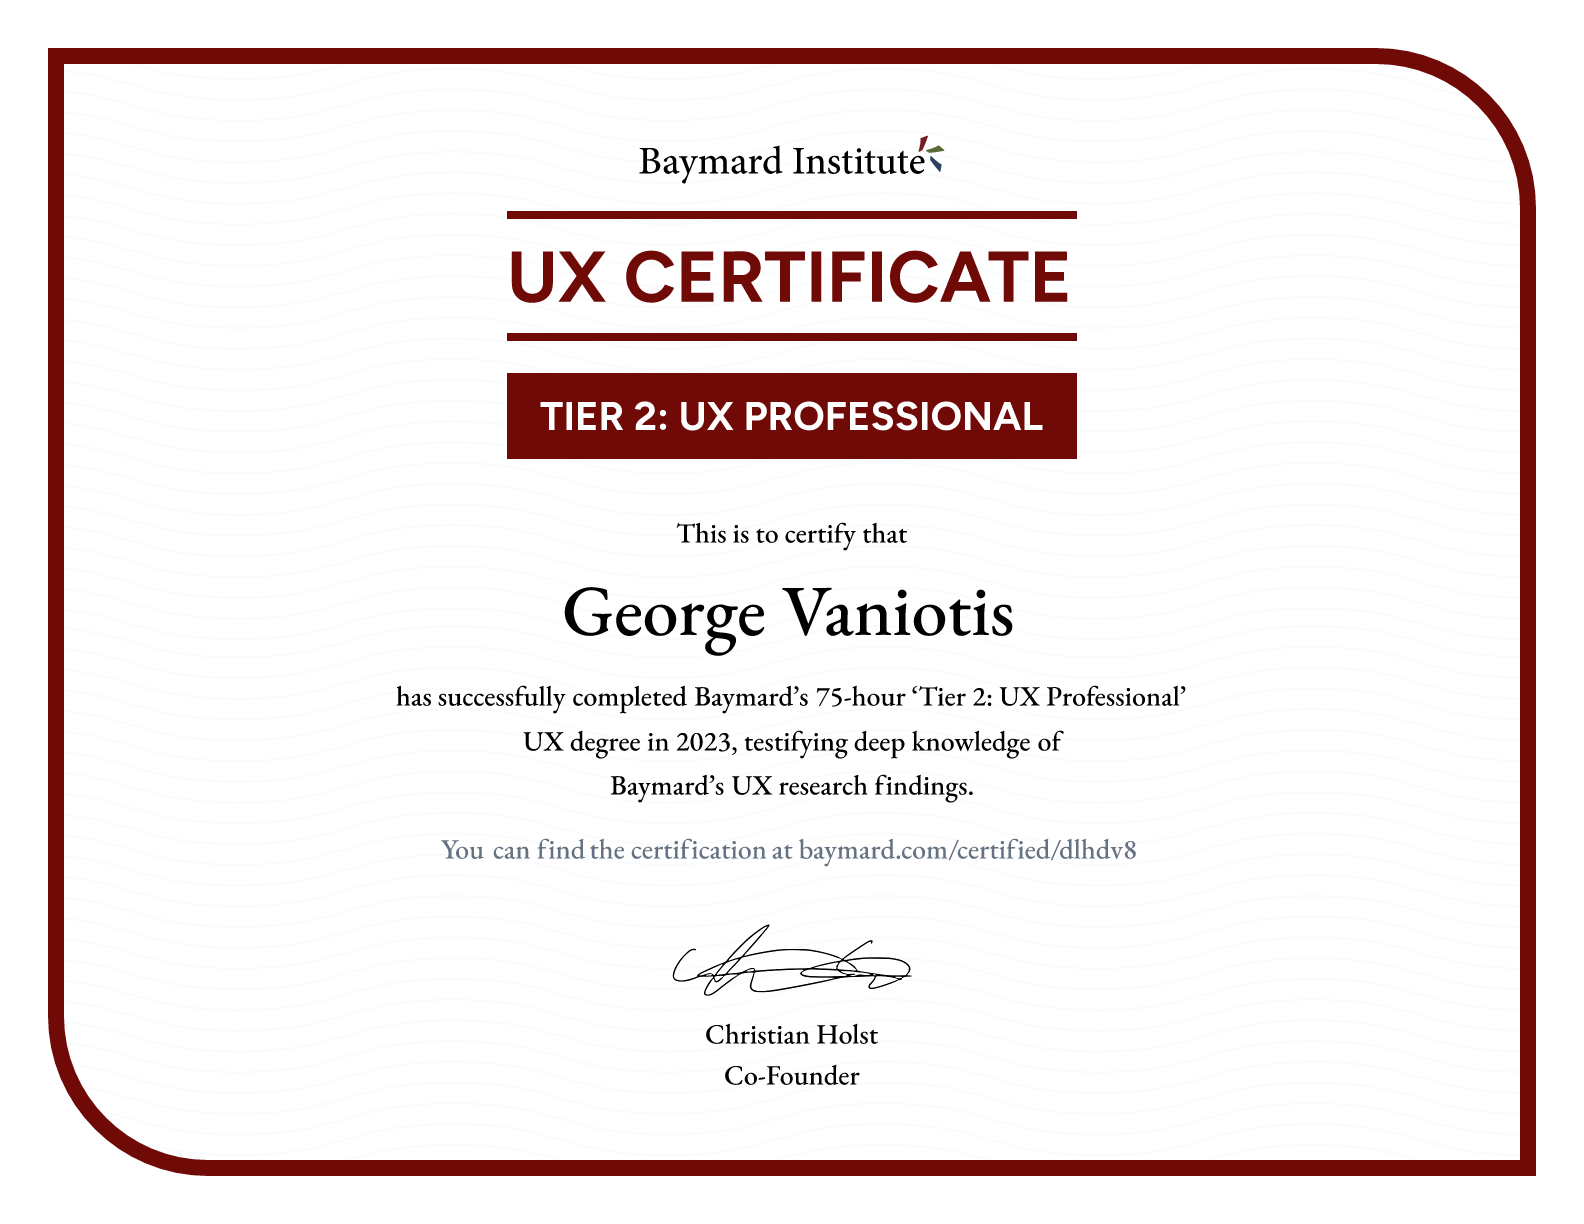 George Vaniotis’s certificate